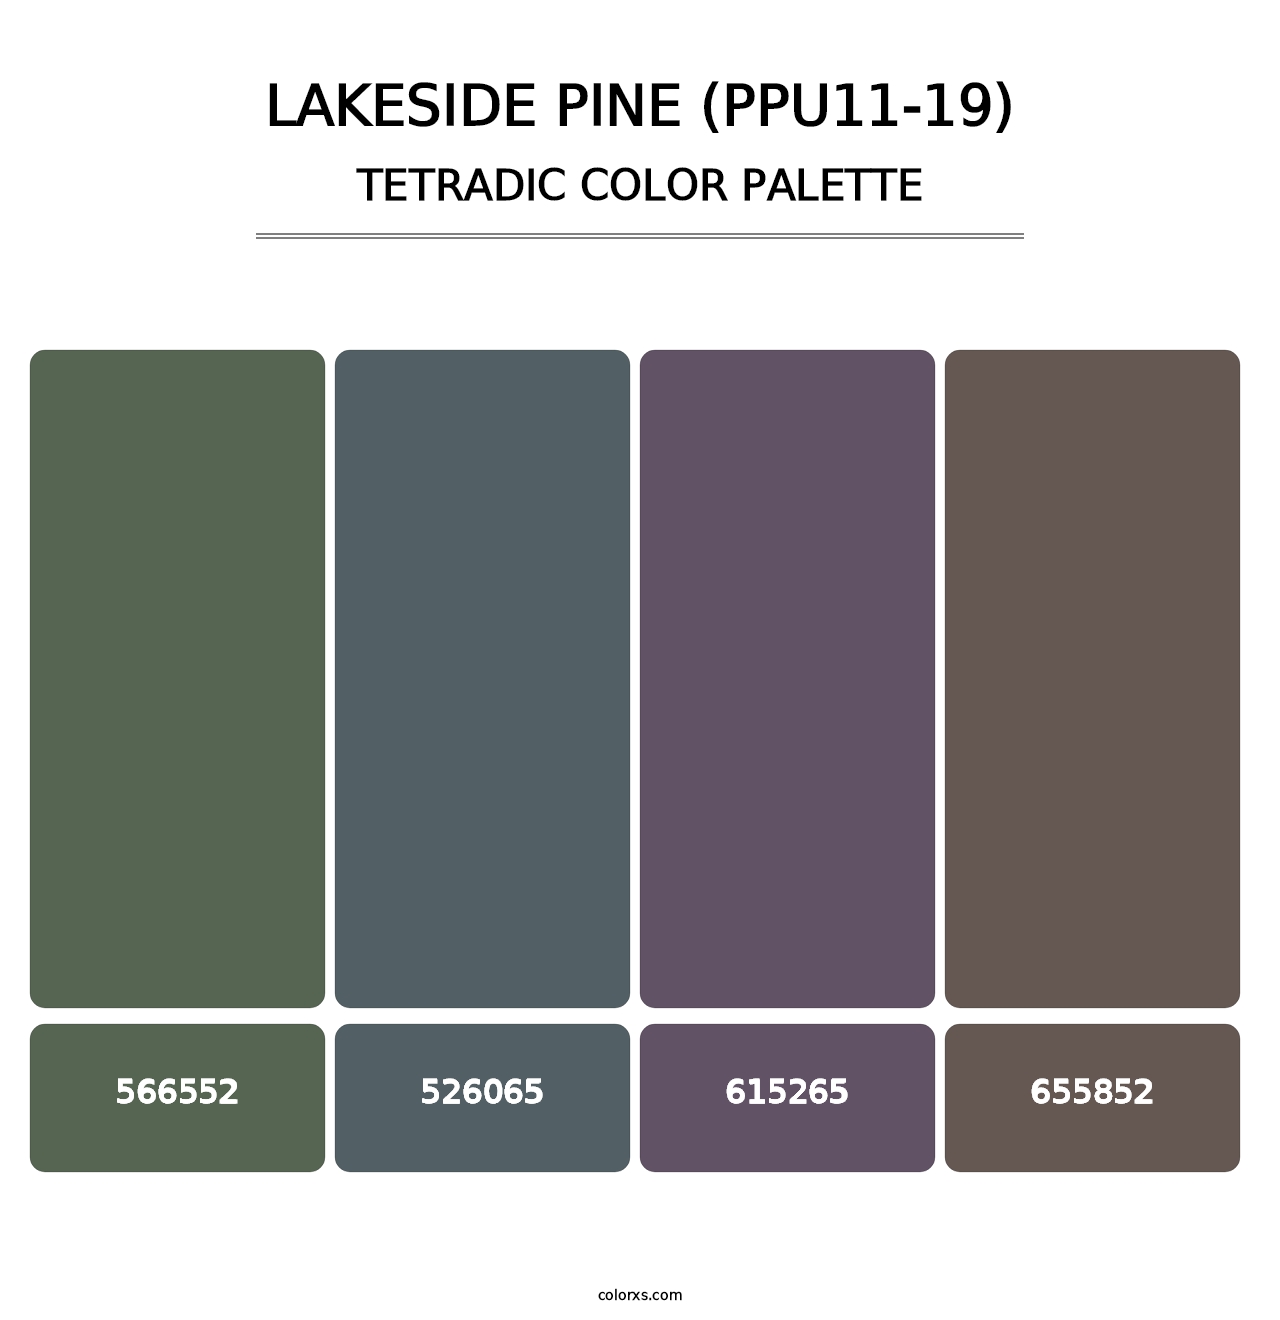 Lakeside Pine (PPU11-19) - Tetradic Color Palette